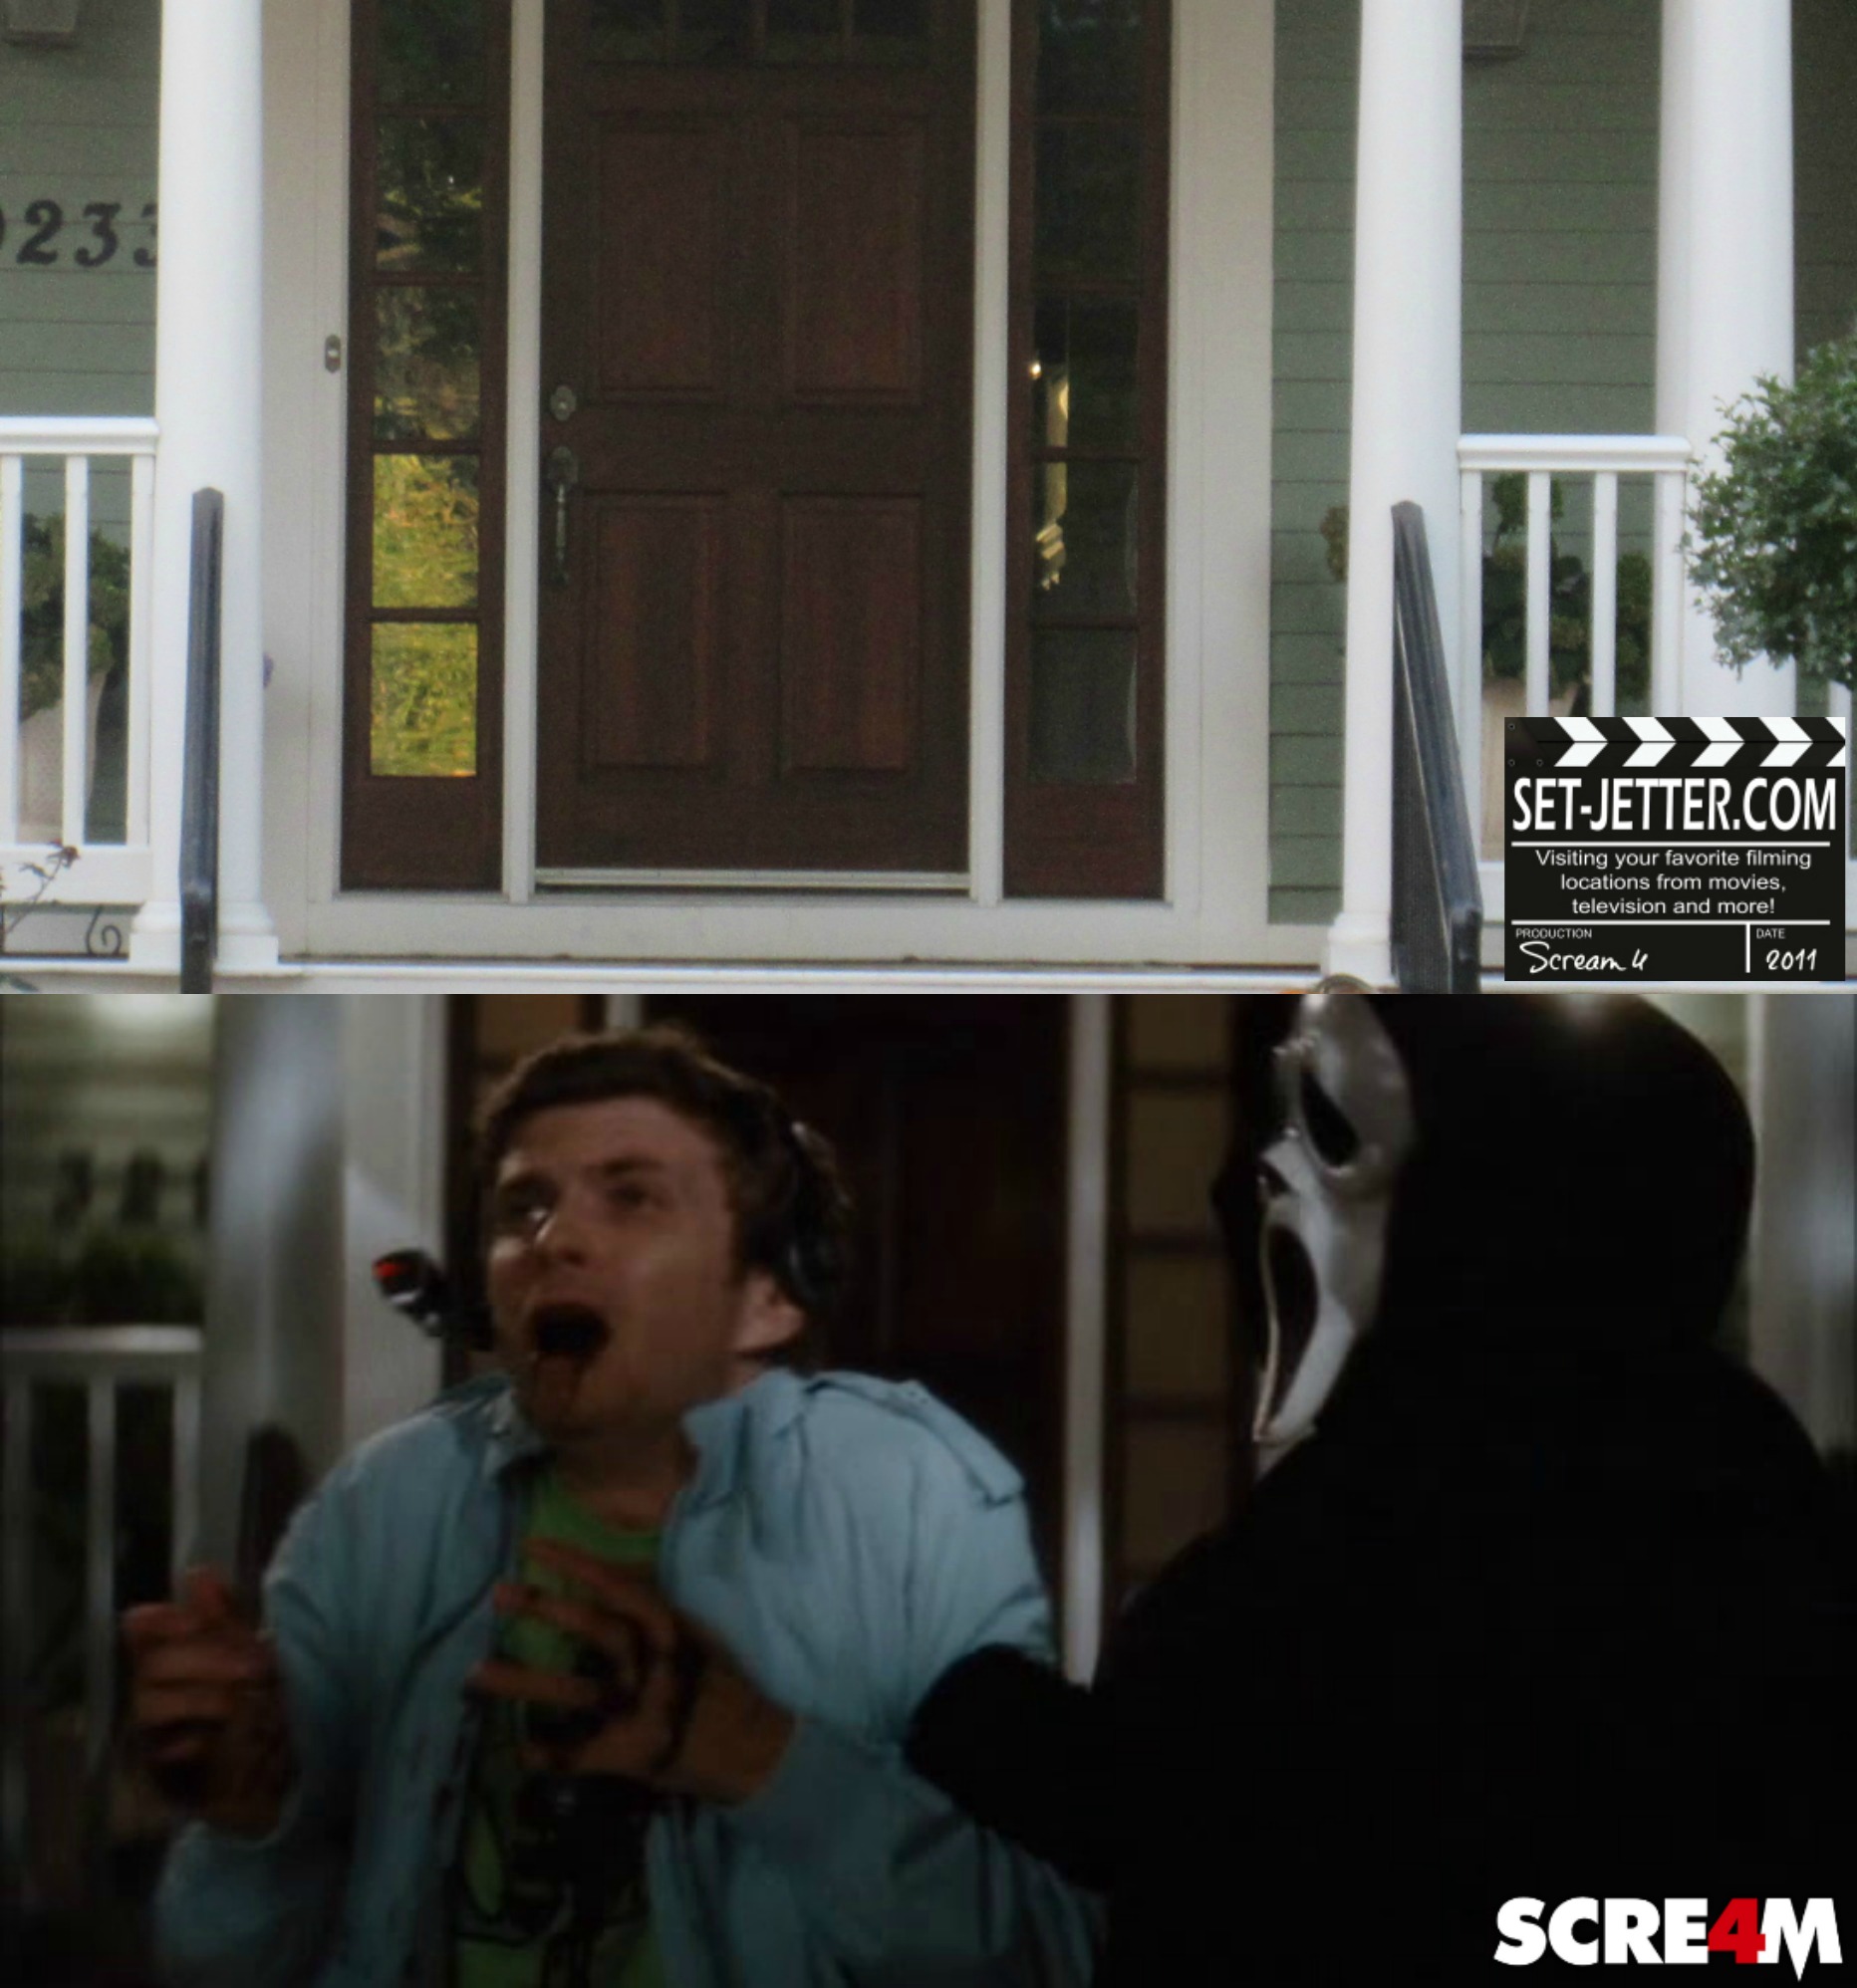 Scream4 comparison 143.jpg